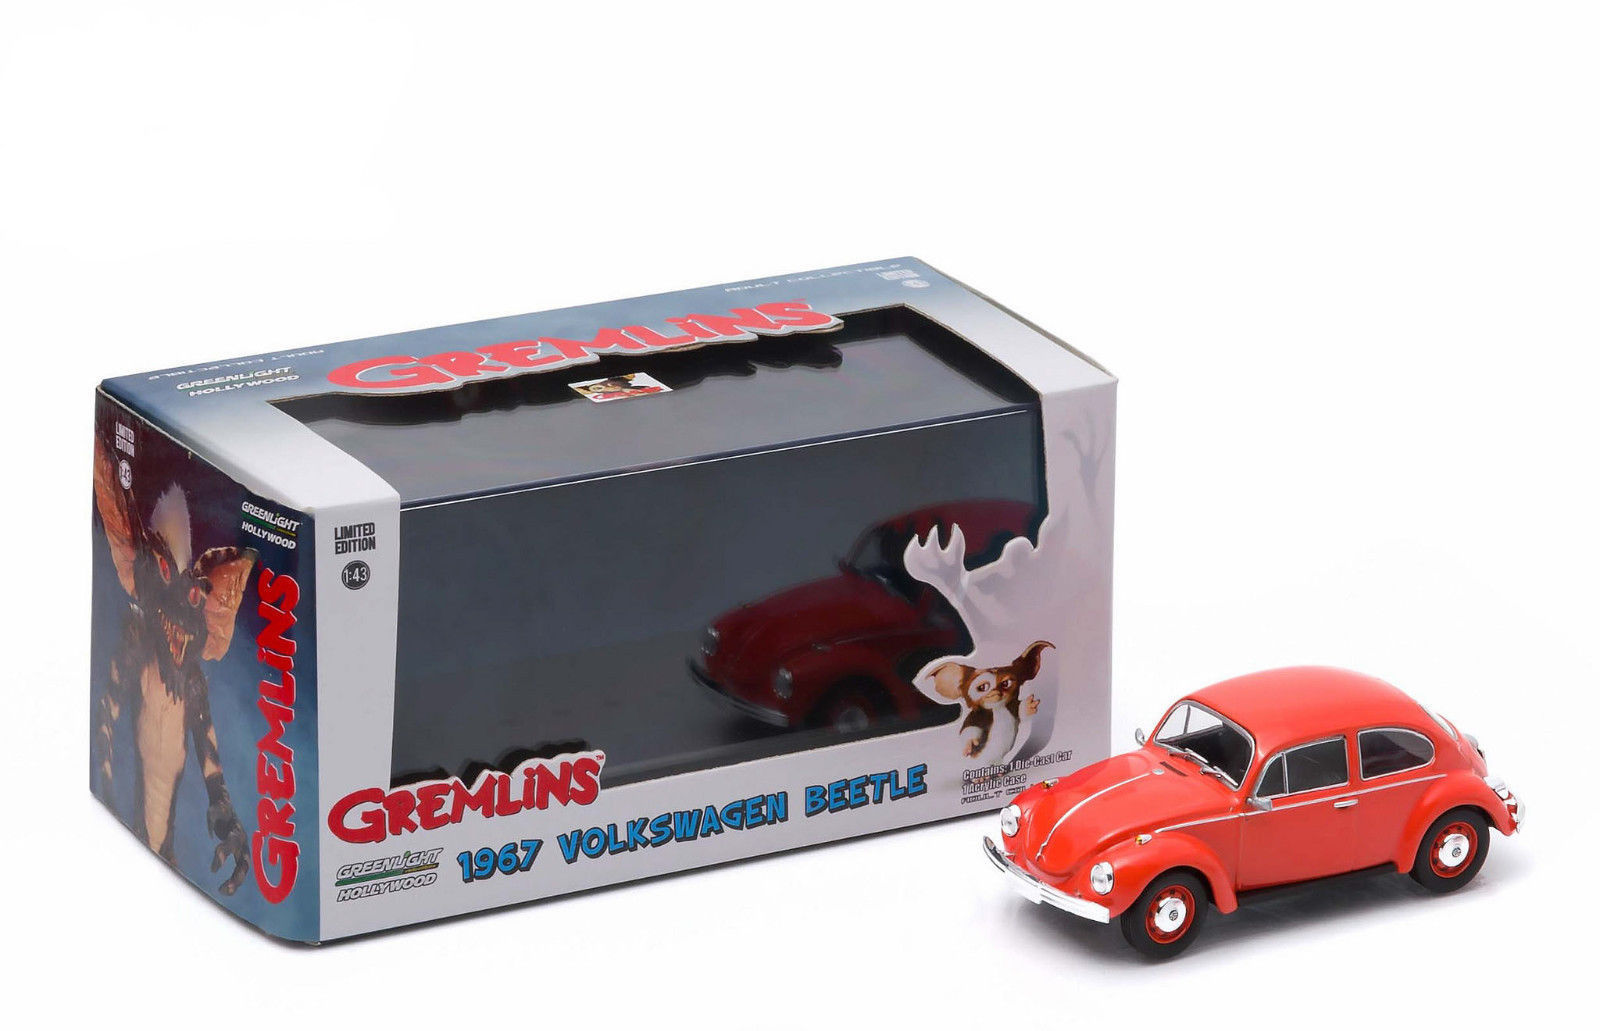 Gremlins 1967 VOLKSWAGEN Beetle Greenlight 86072 for sale online 